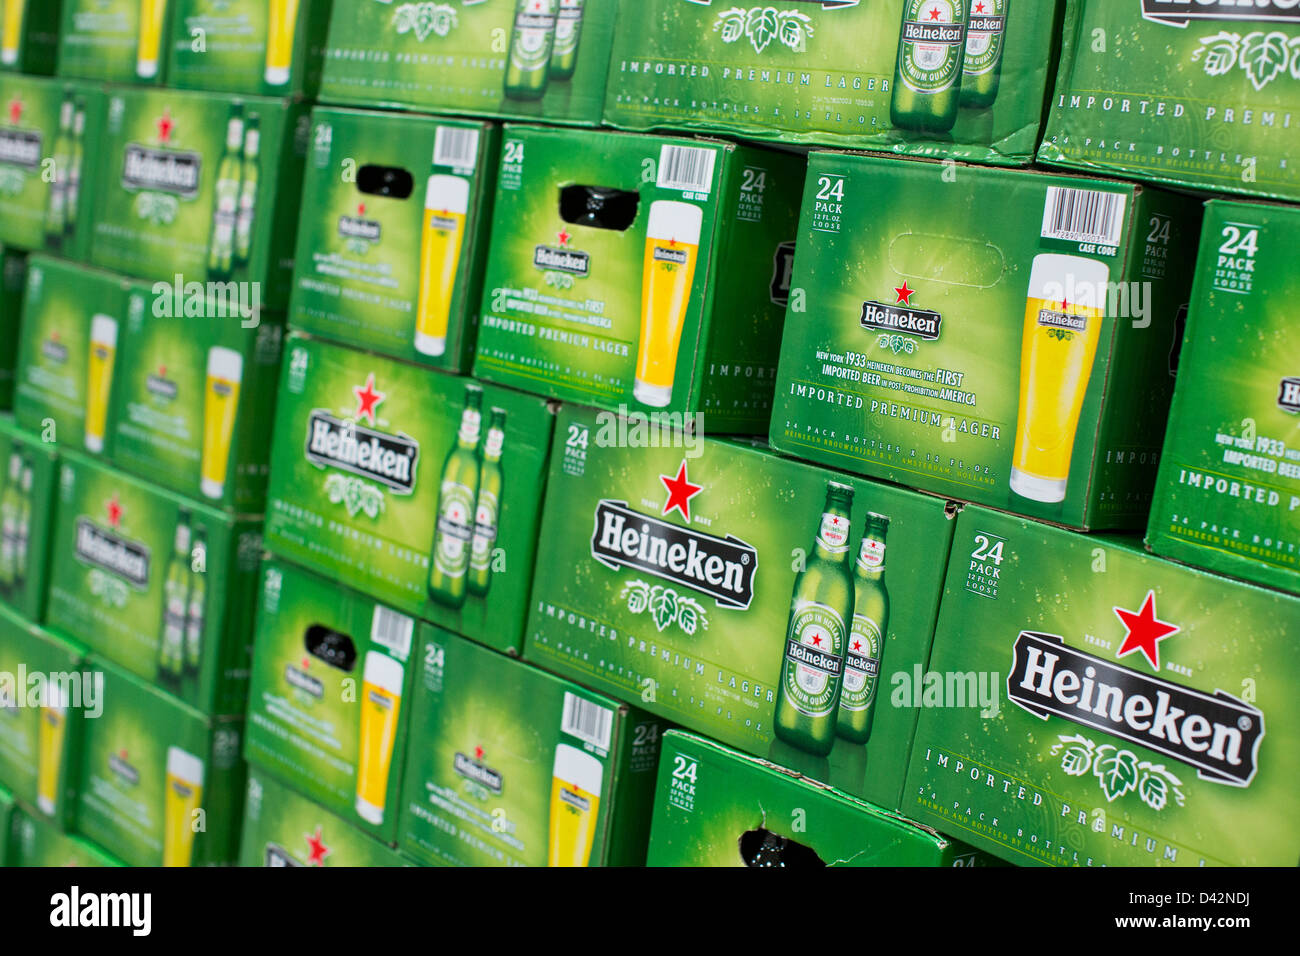 Heineken beer on display at a Costco Wholesale Warehouse Club. Stock Photo